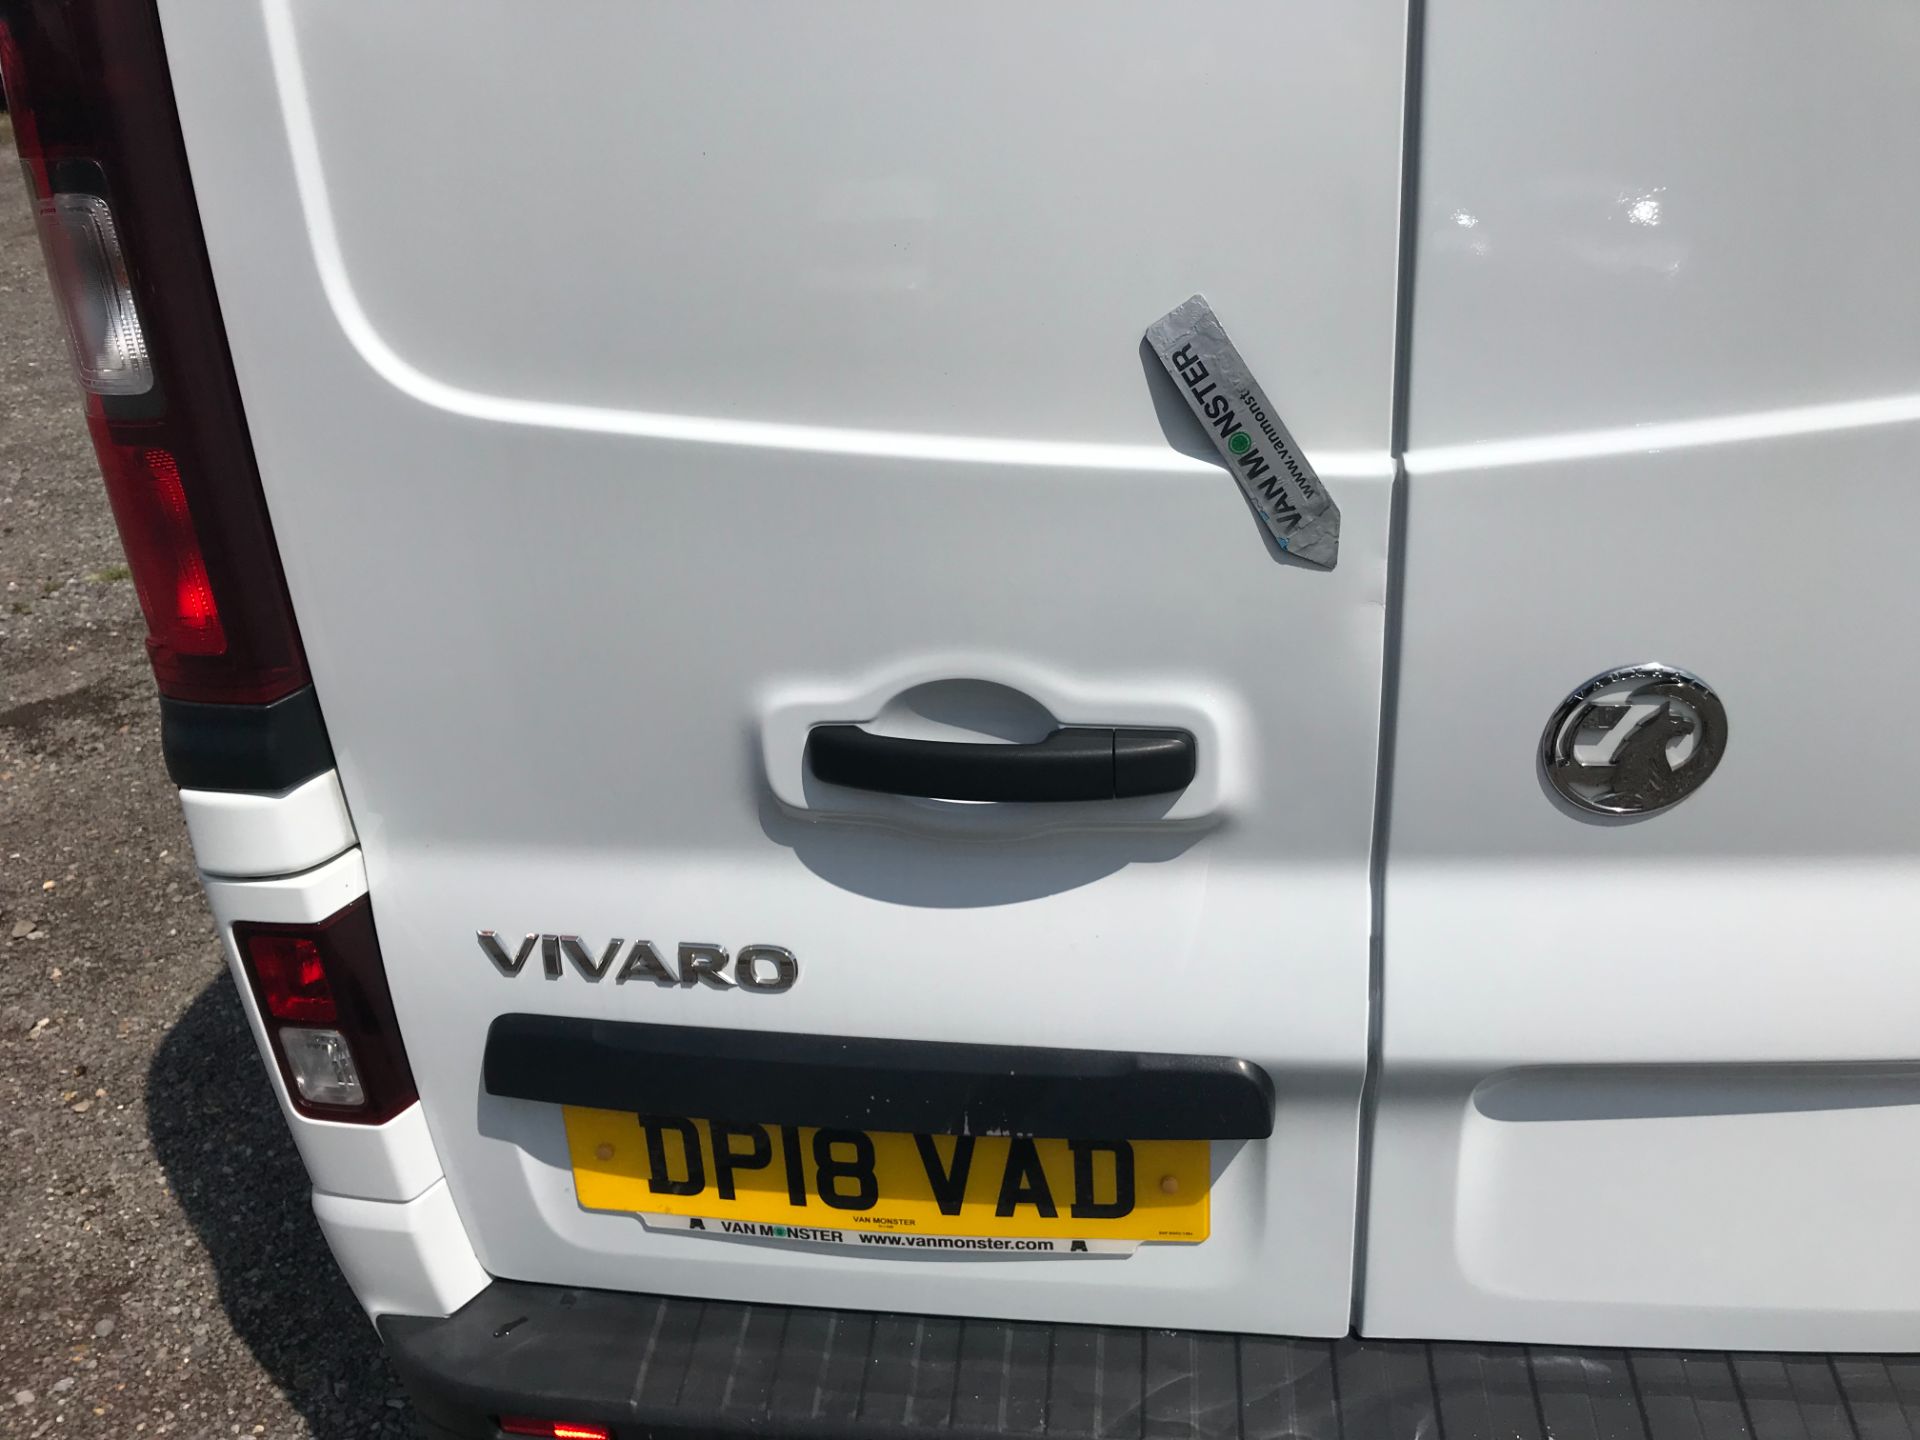 2018 Vauxhall Vivaro 2900 1.6Cdti 120Ps Sportive H1 Van EURO 6 (DP18VAD) Image 39